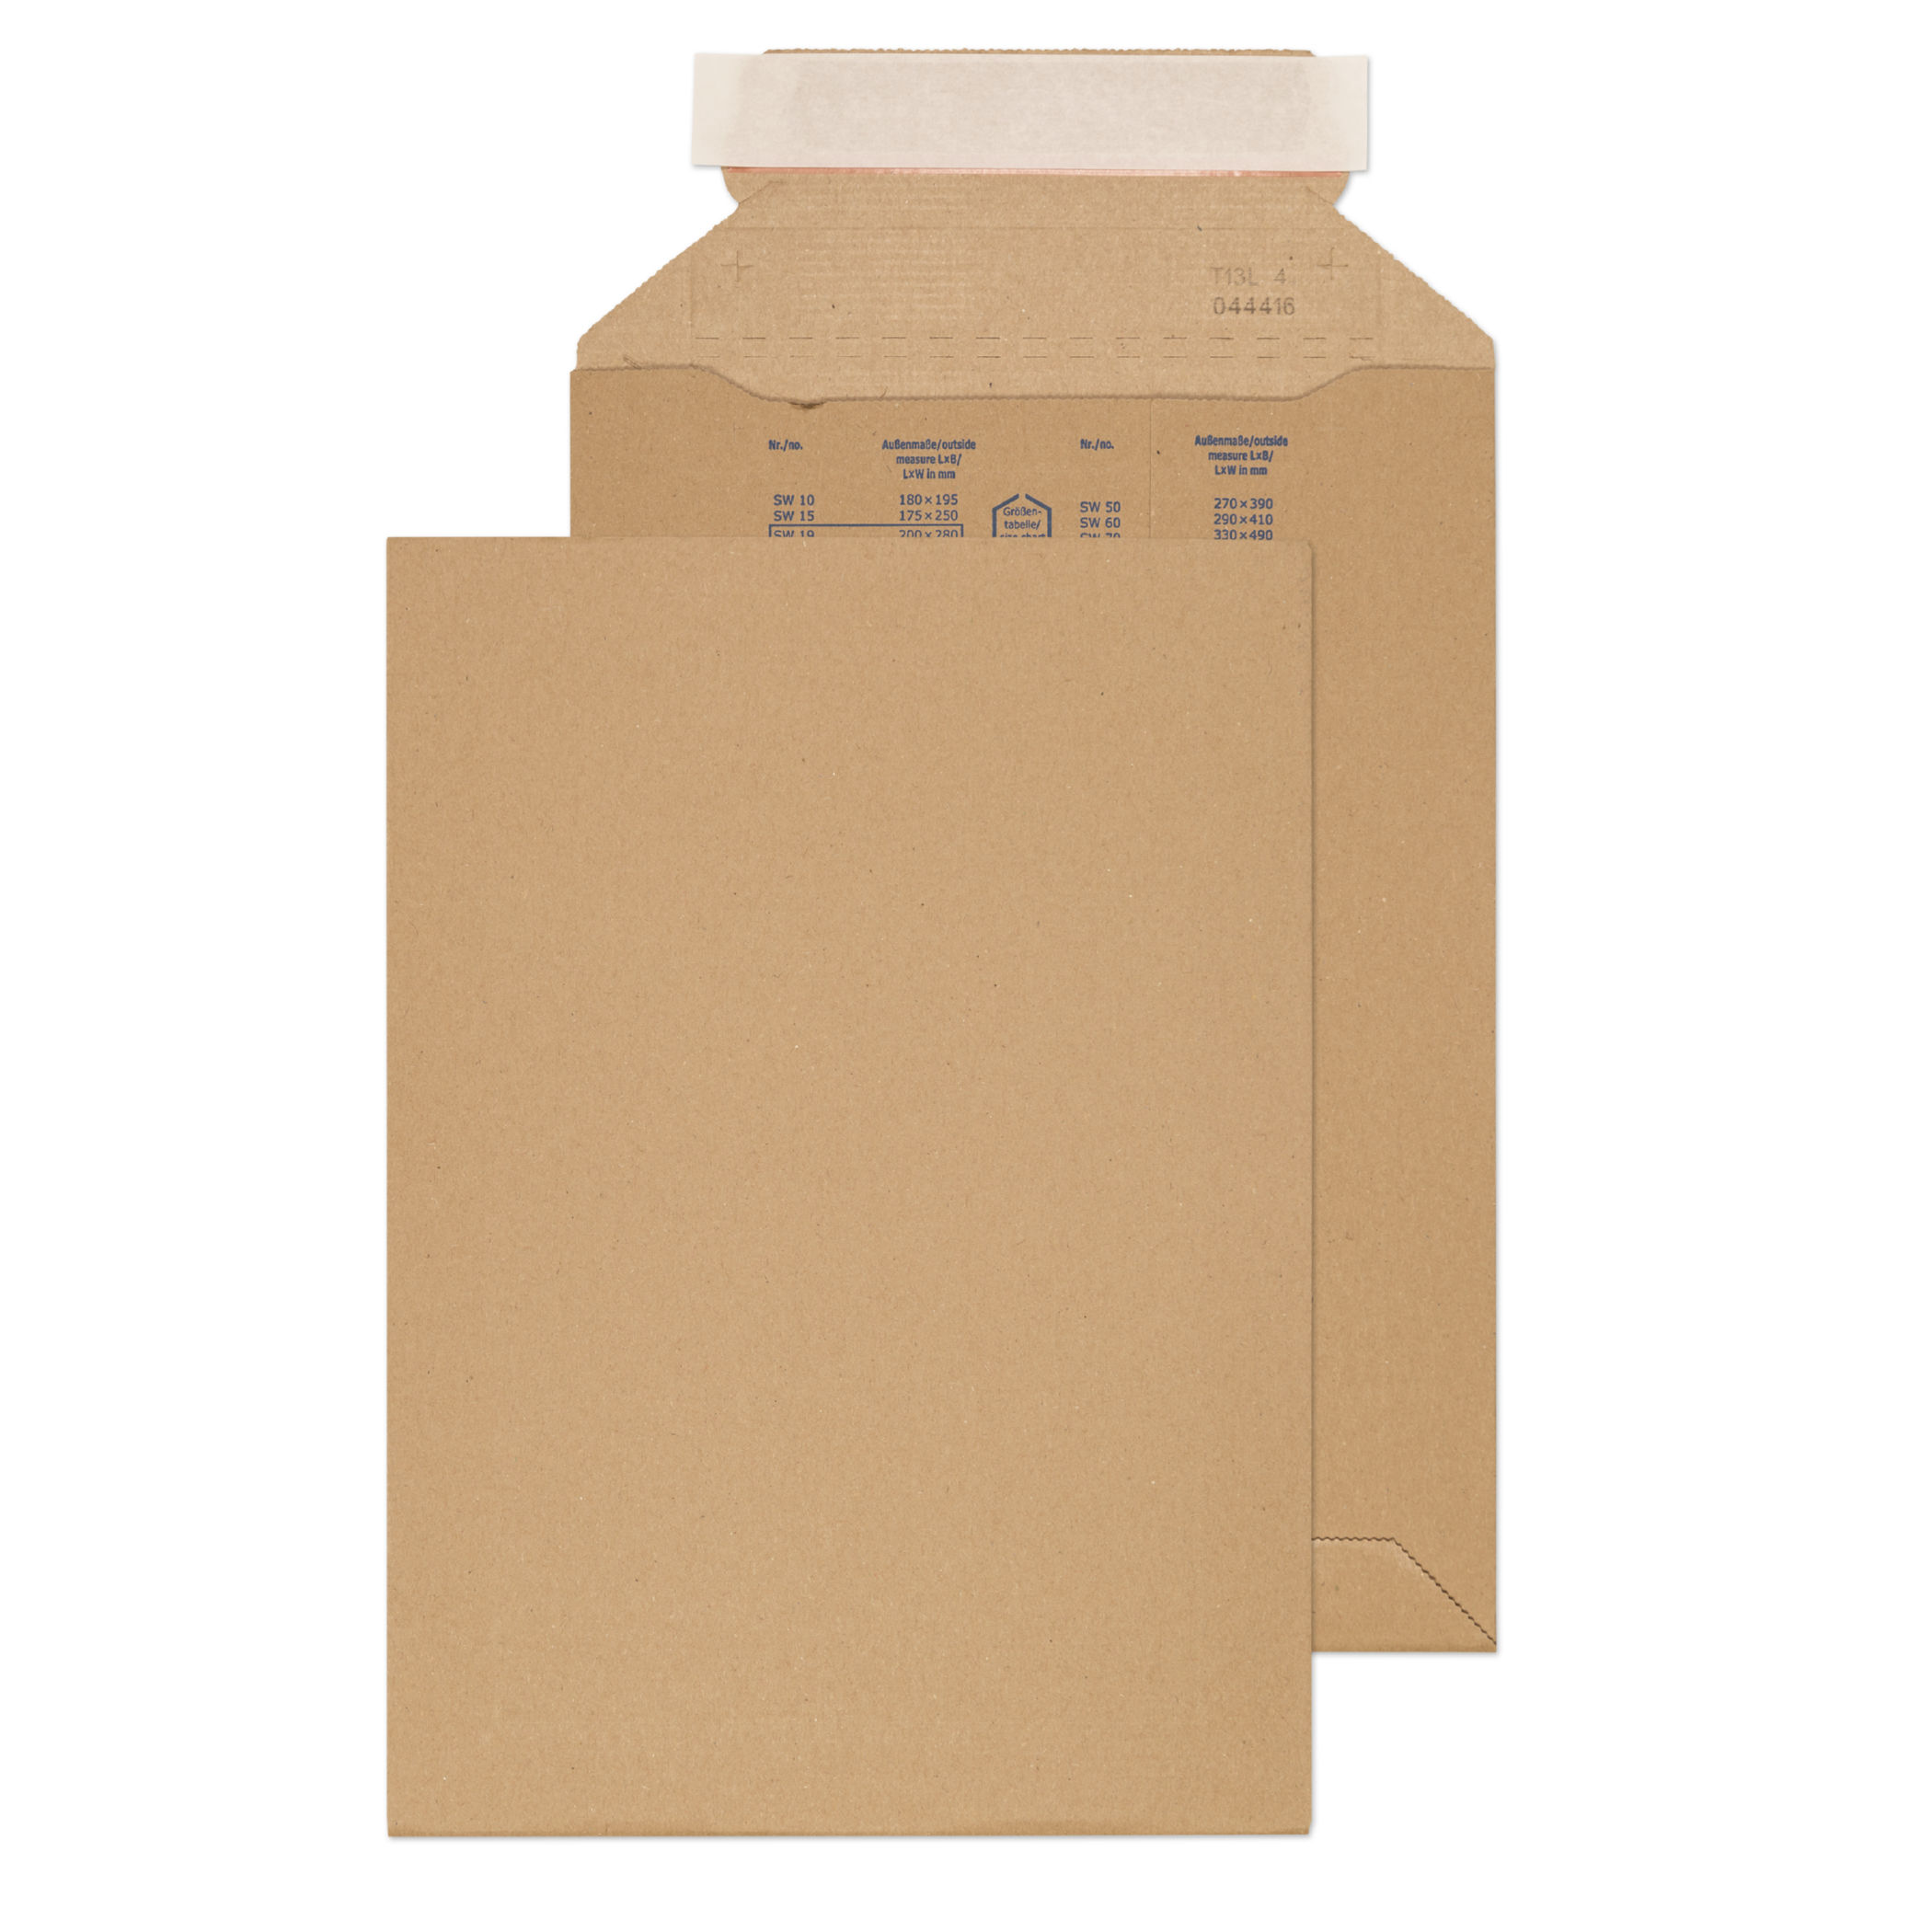 Blake Purely Packaging Corrugated Pocket Envelope 280x200mm Peel and Seal 300gsm Kraft (Pack 100)